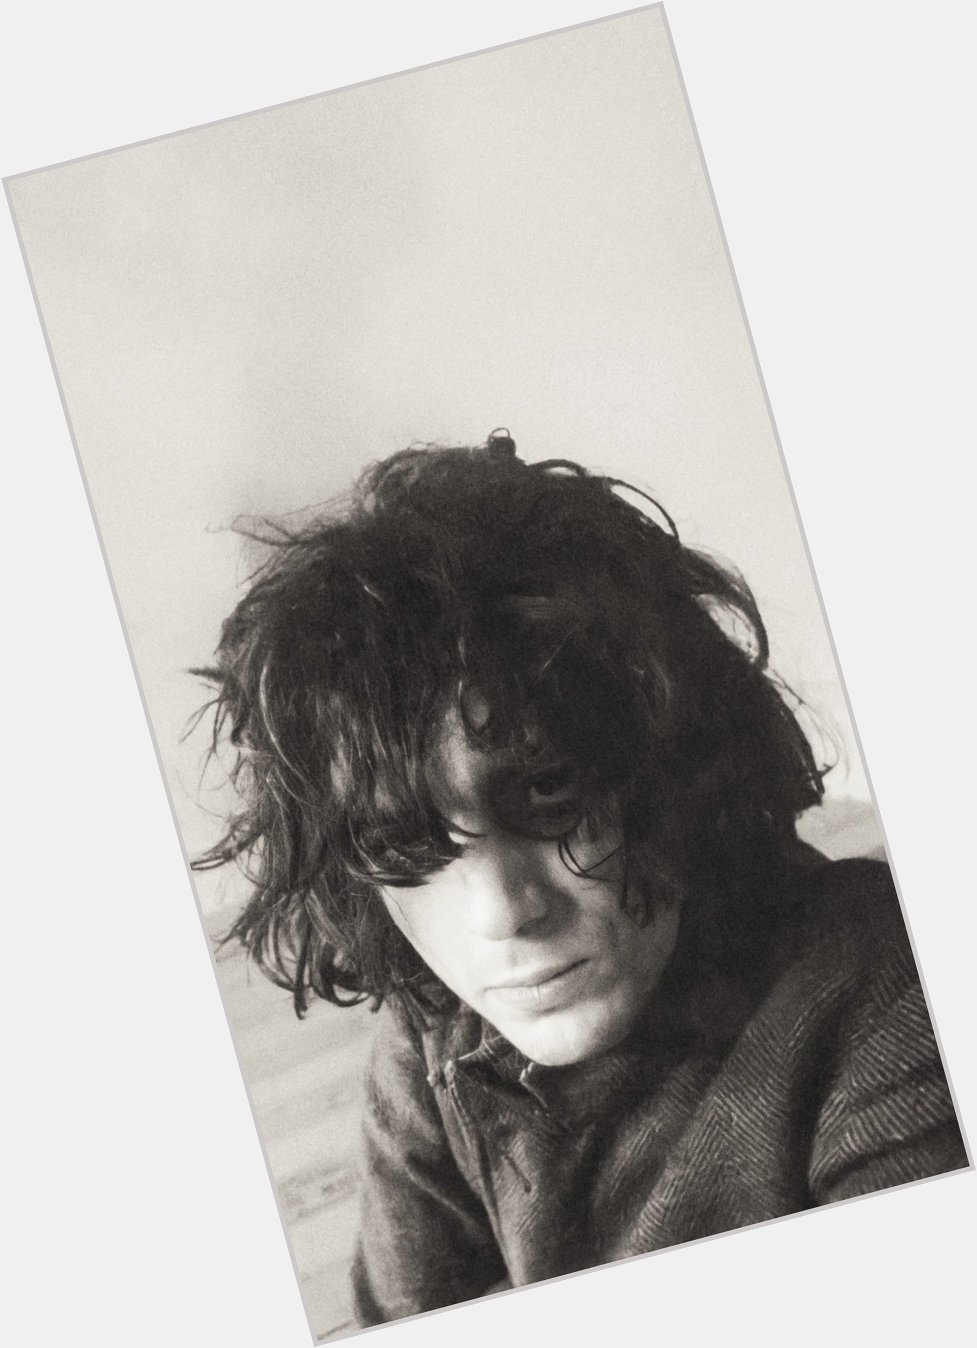 Syd Barrett was born on January 6, 1946
Happy birthday rock genius, wish you were here 